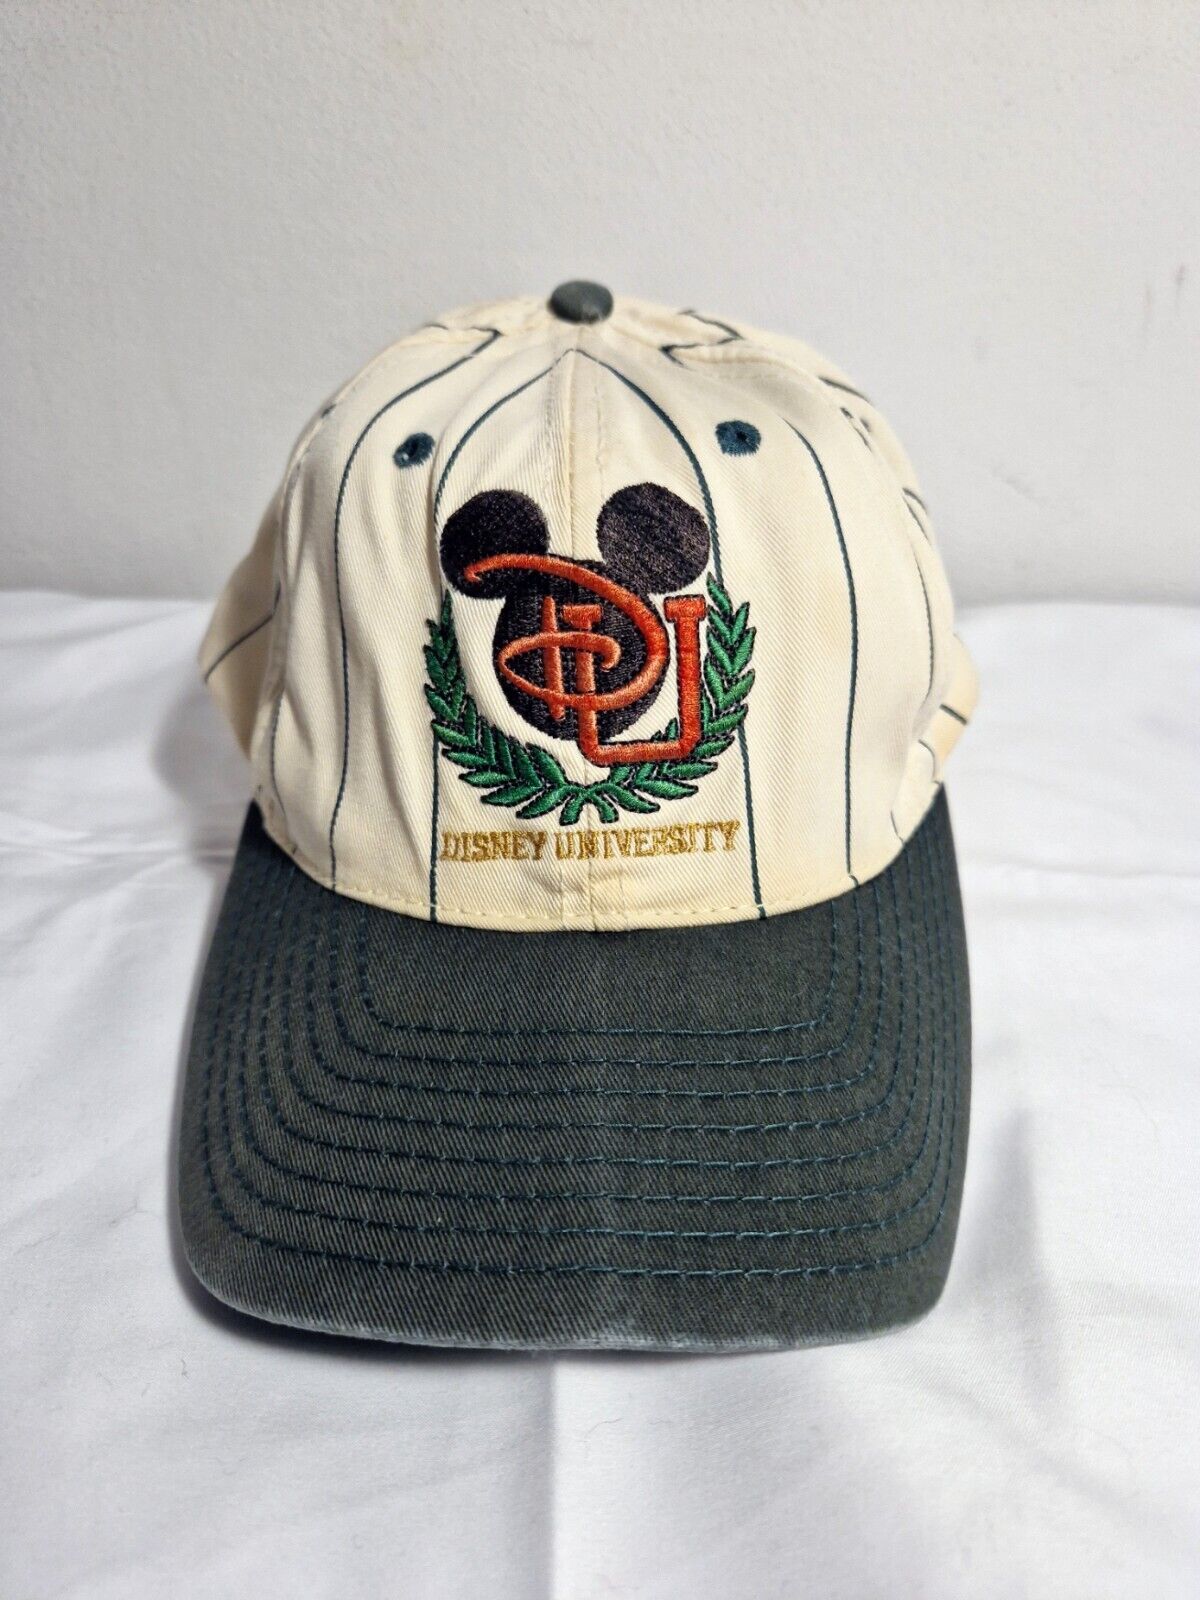 Euro Disney Vintage Cap Hat 90’s Collectable Baseball Mickey Mouse Disney